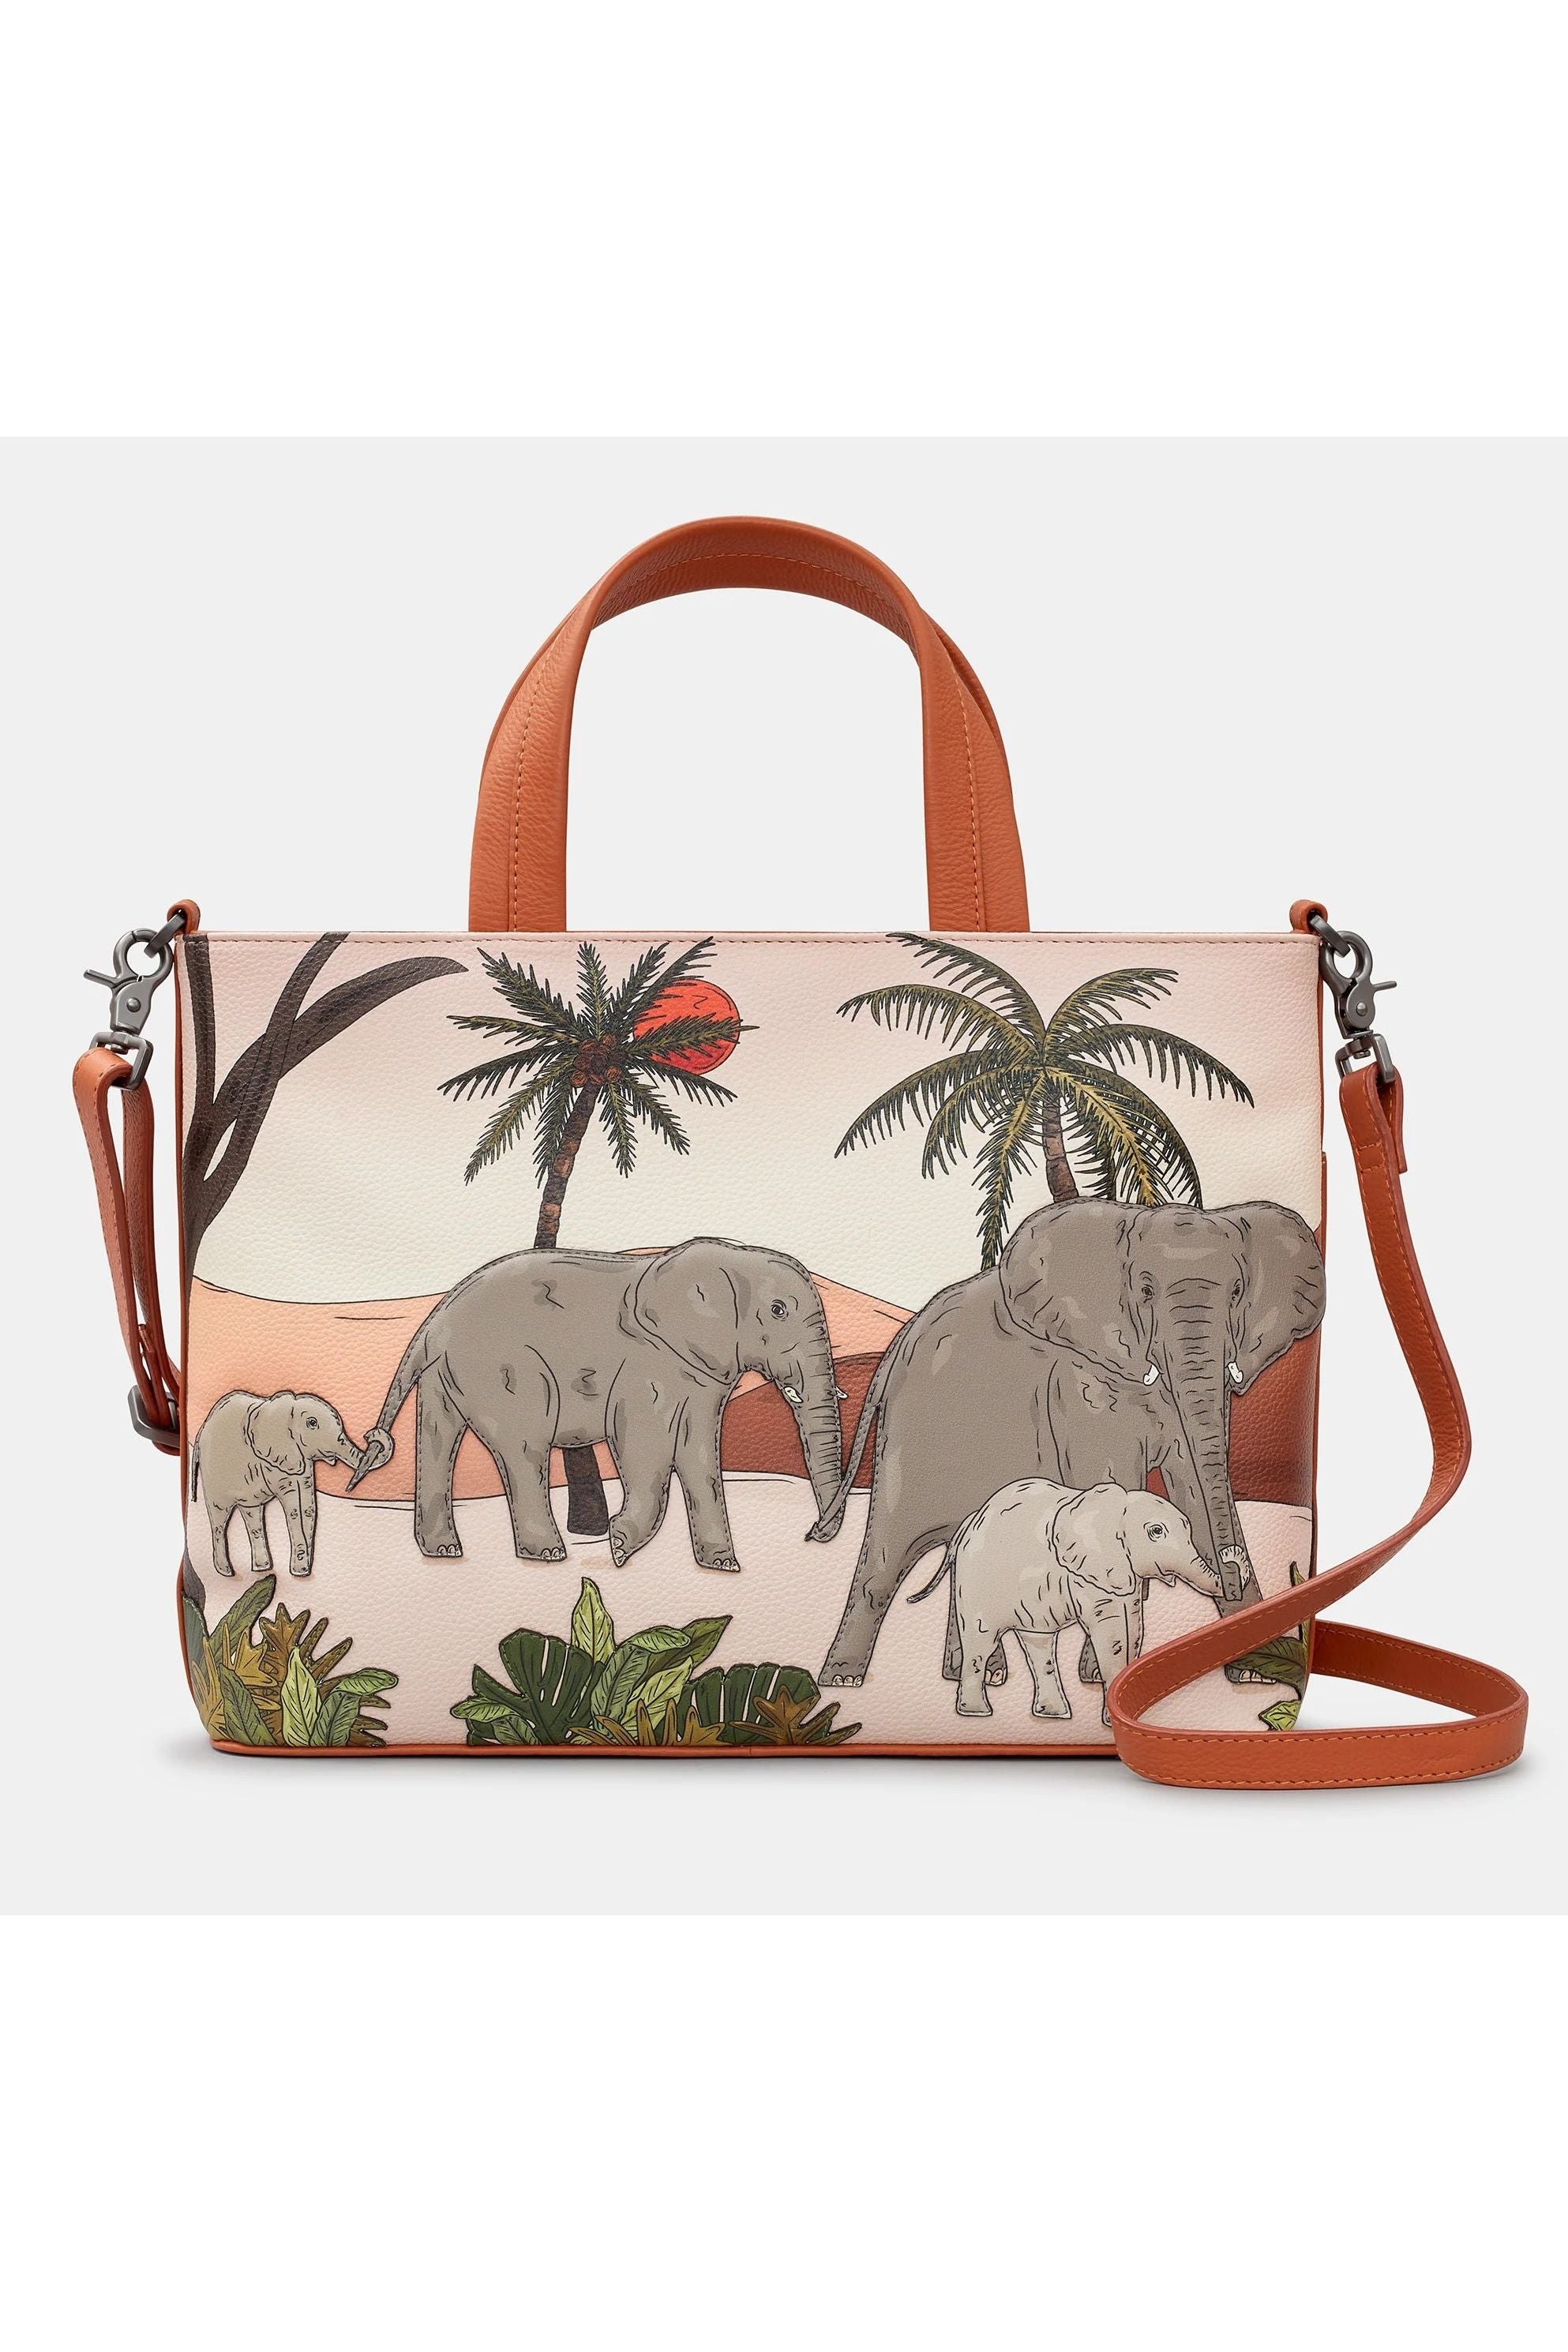 Yoshi Elephant Parade Multi way Grab Handbag